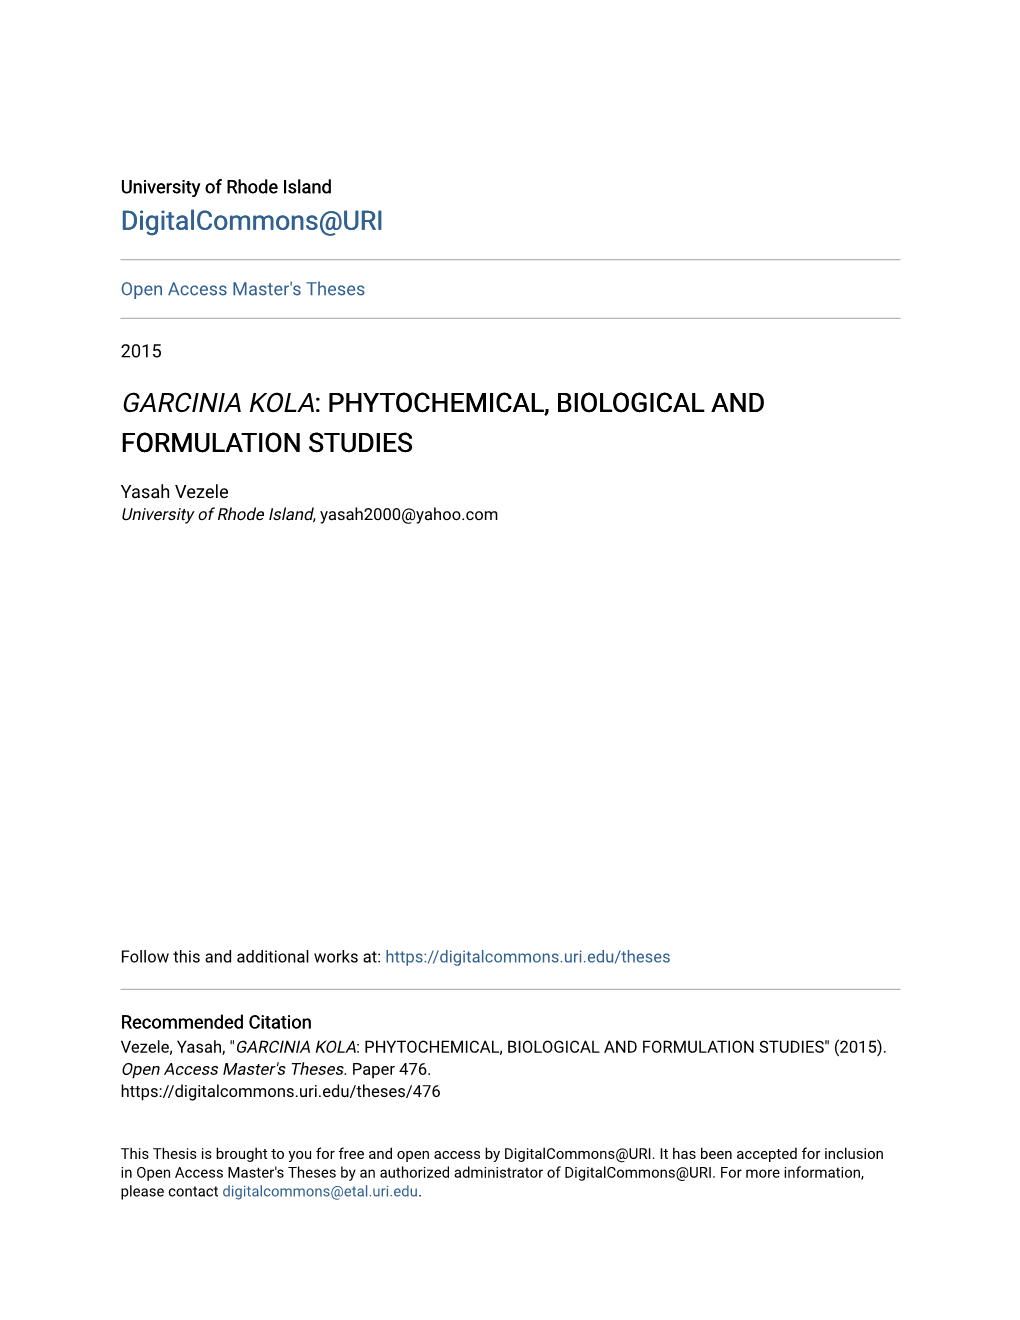 Garcinia Kola: Phytochemical, Biological and Formulation Studies